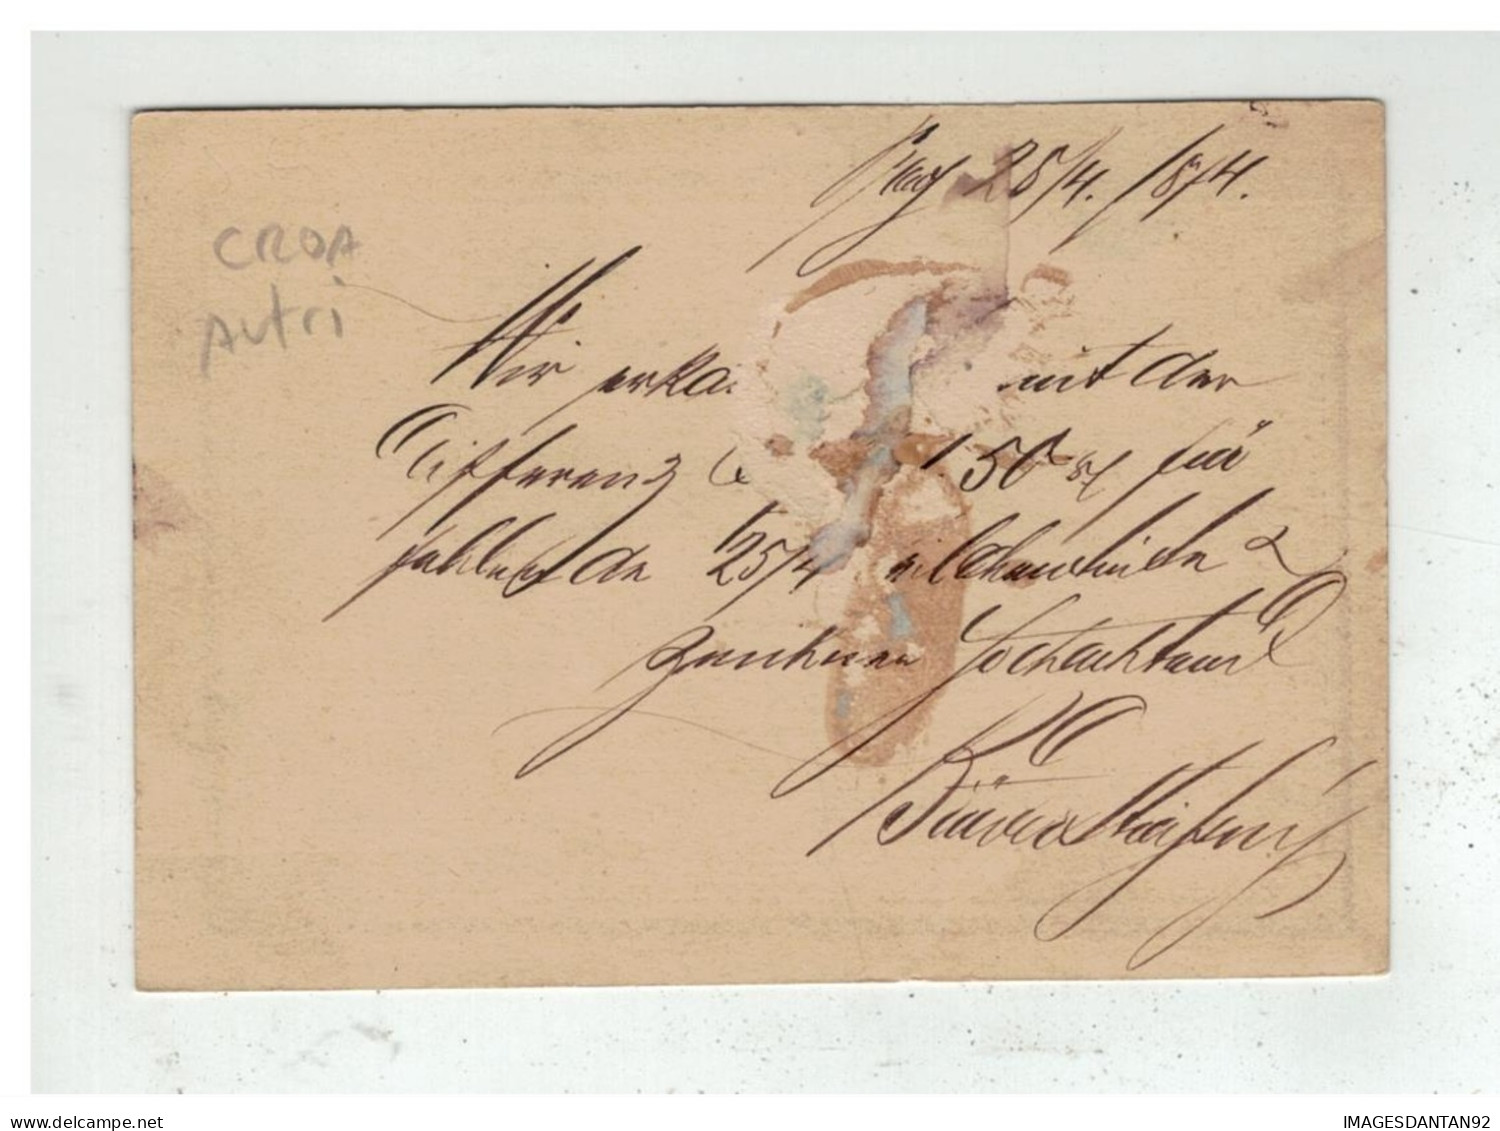 Autriche - Entier Postal 2 Kreuser De PRAG BAHNHOF à Destination De KARLSTADT KARLOVAC CROATIA 1874 - Postal Stationery